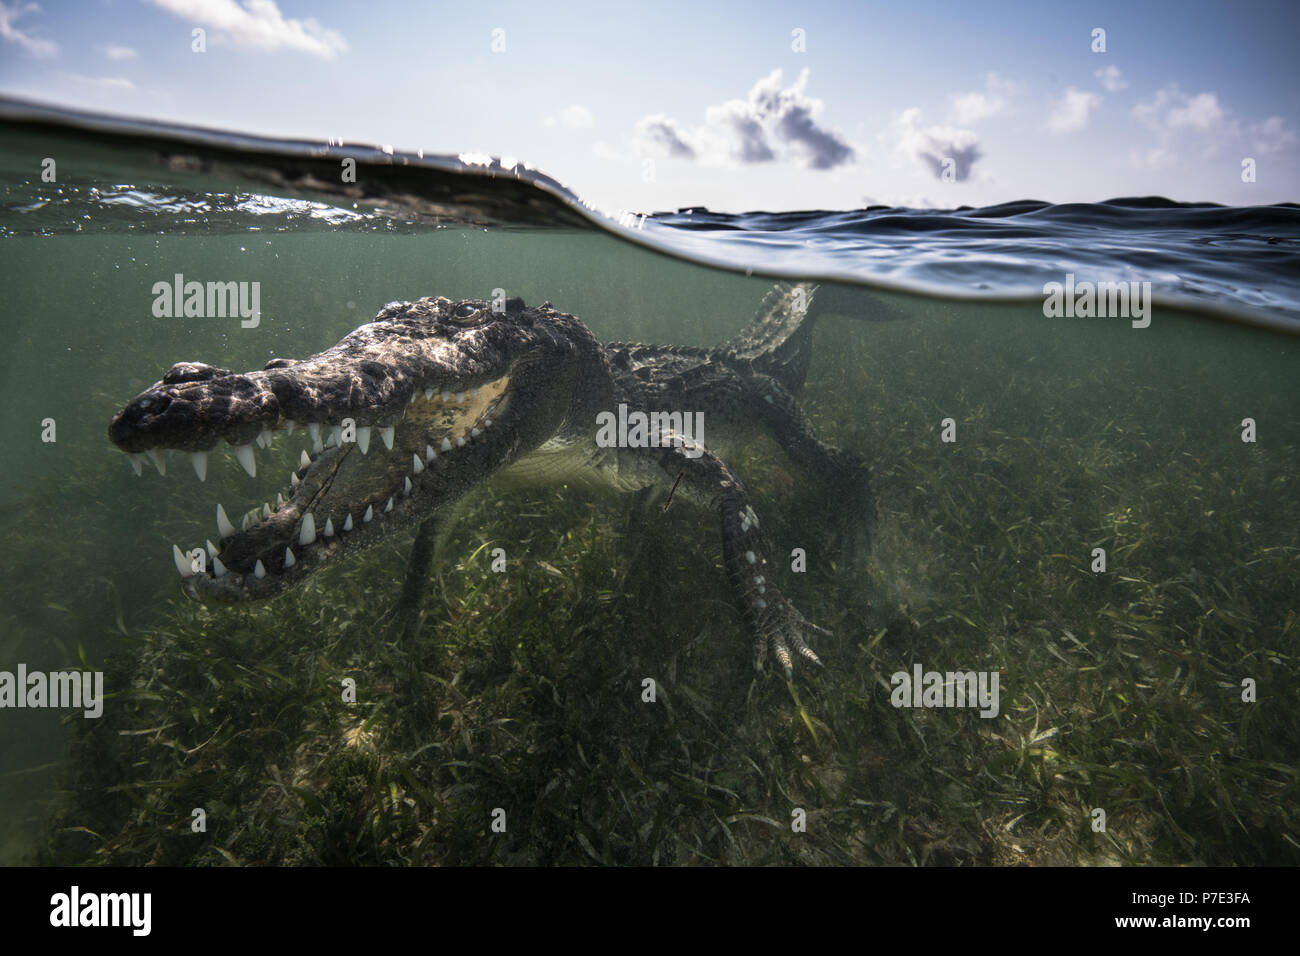 Crocodile (Crocodylus acutus) dans les eaux peu profondes montrant les dents, banques, Chinchorro Xcalak, Quintana Roo, Mexique Banque D'Images